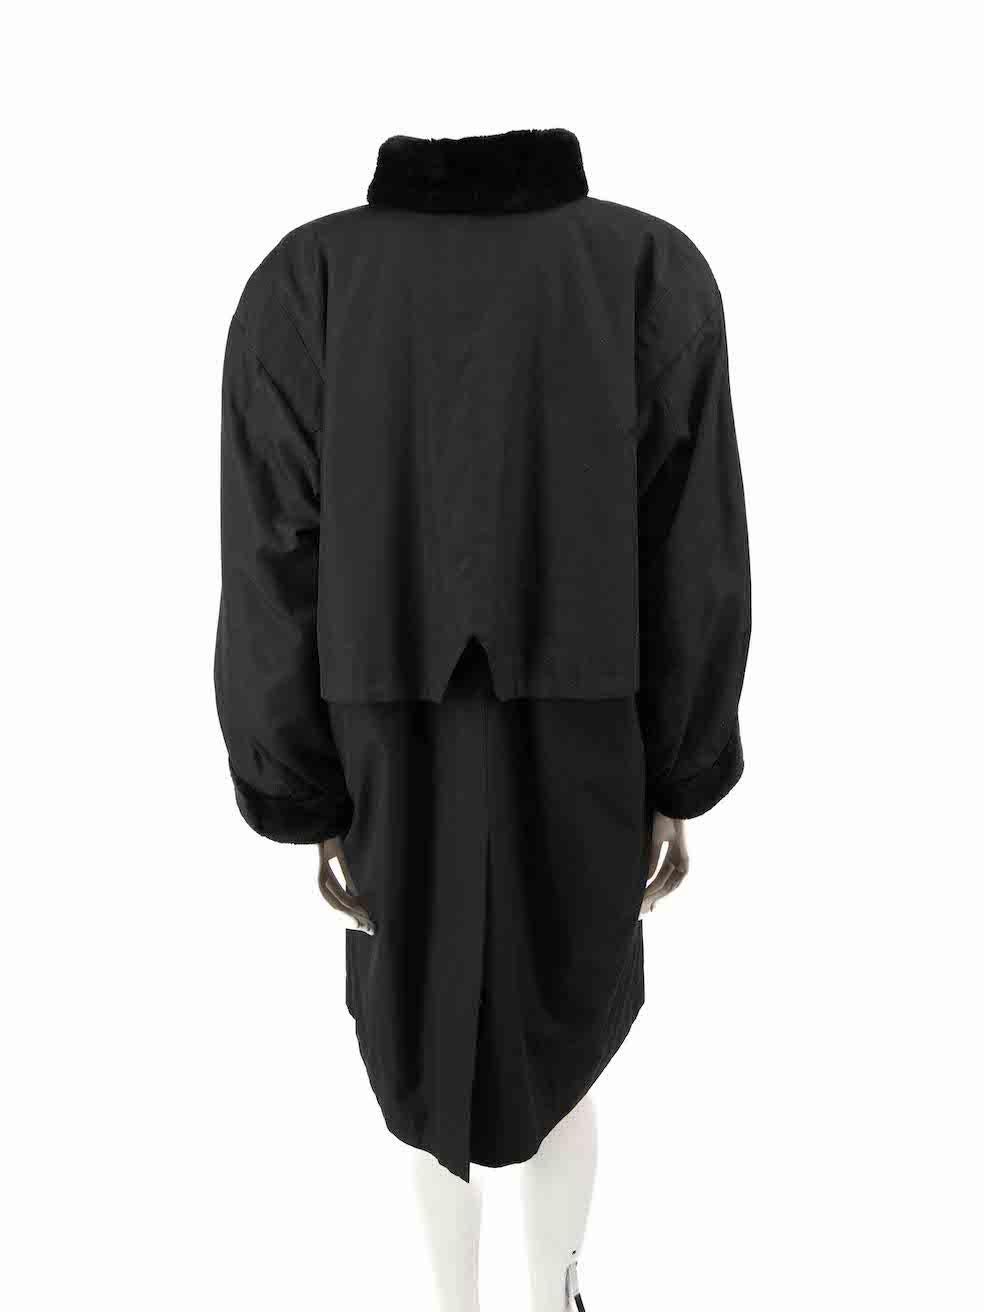 Saint Laurent Black Faux Fur Lined Coat Size M In Excellent Condition For Sale In London, GB